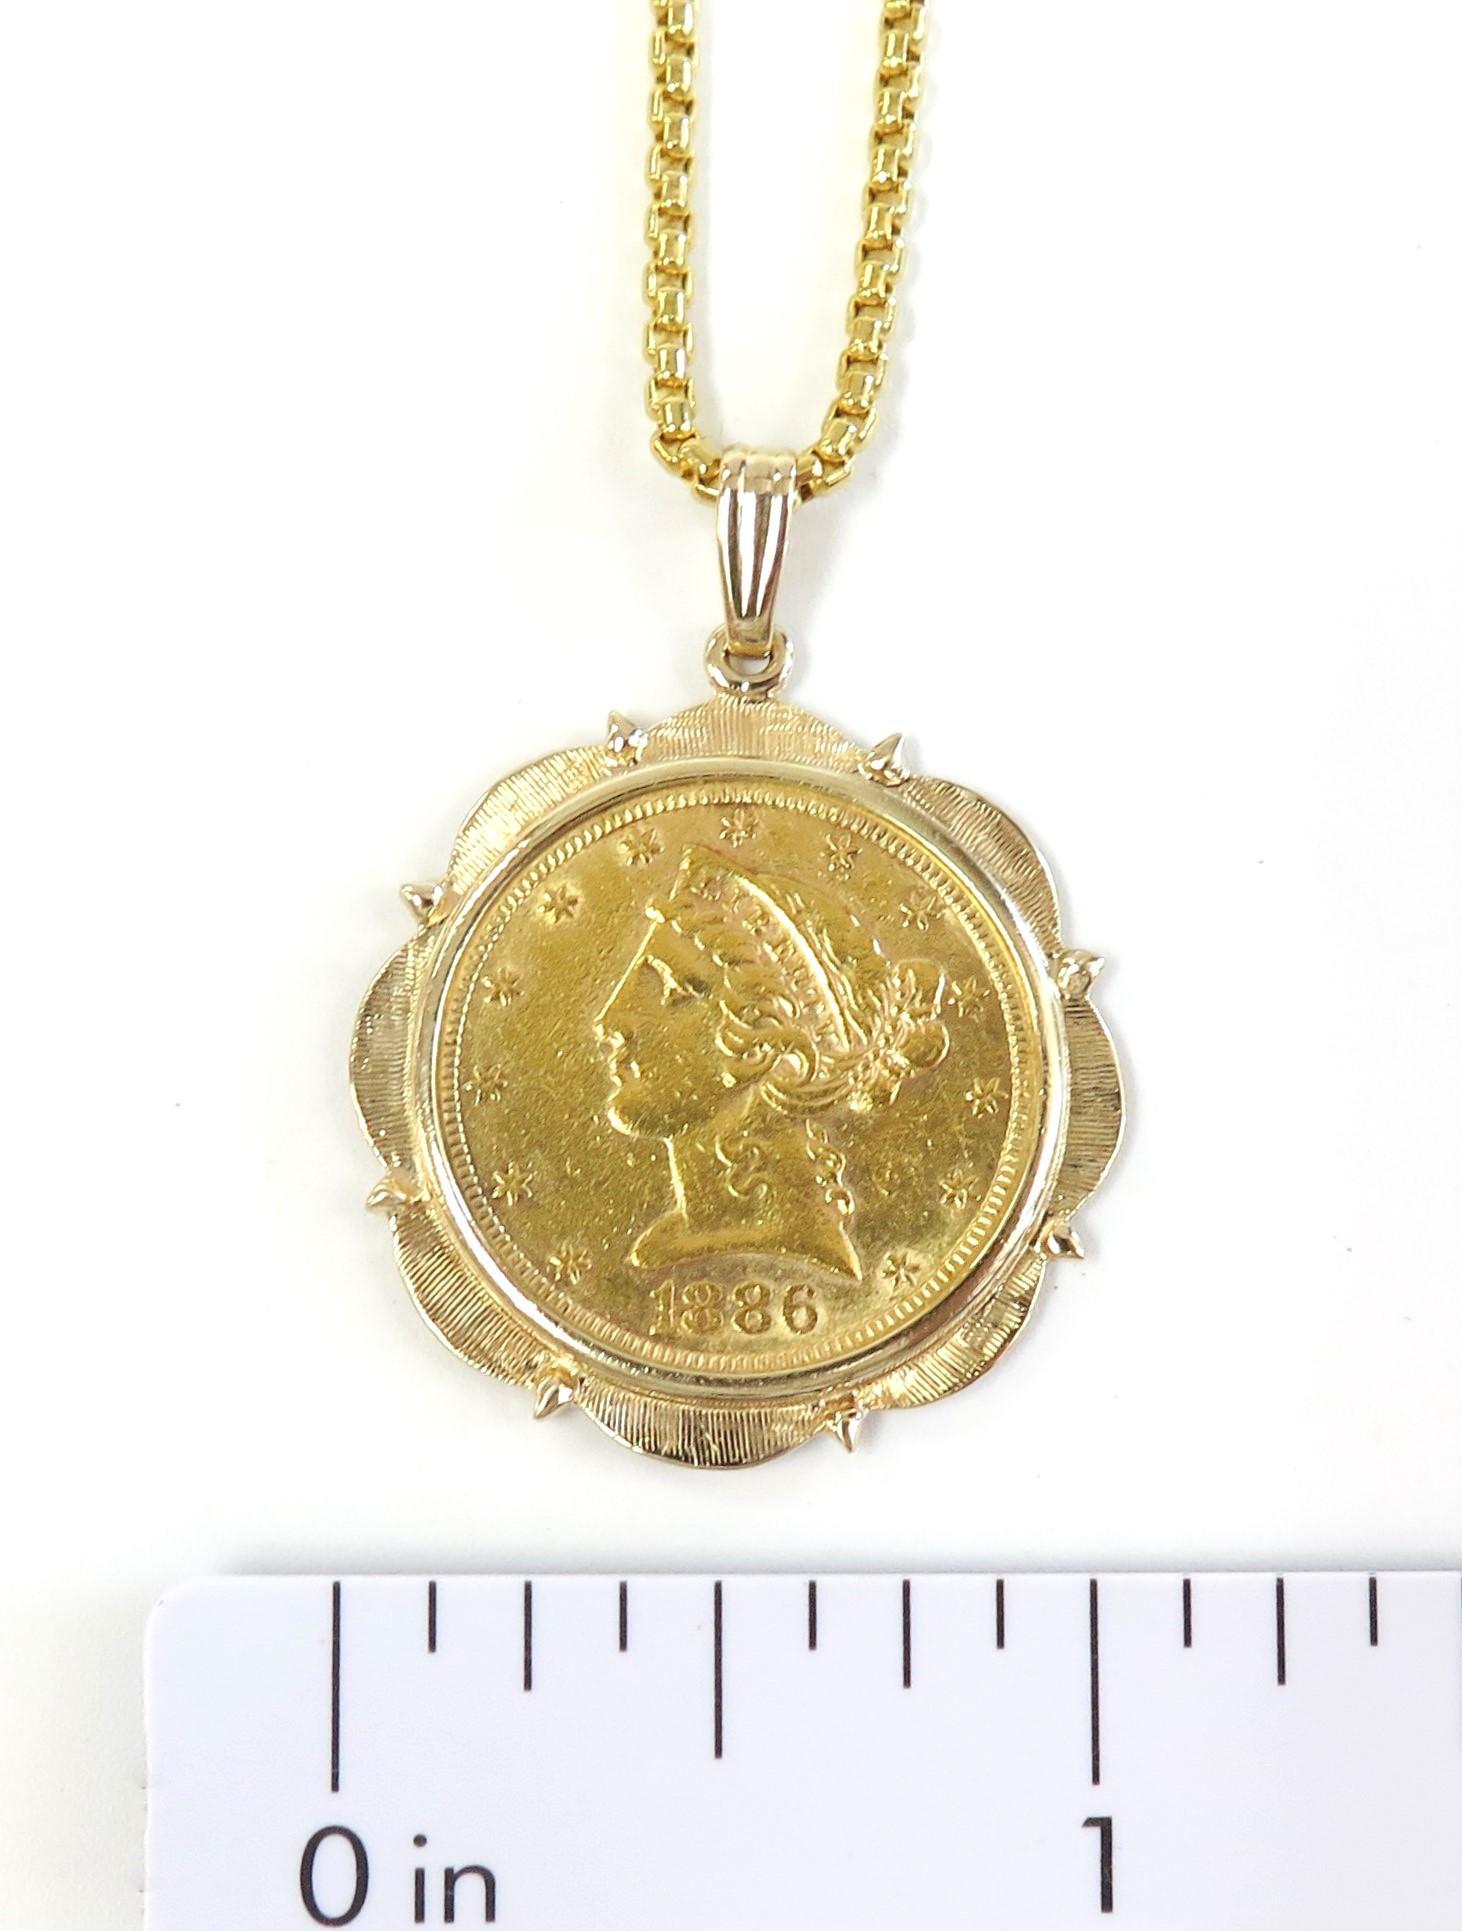 1886-s $5 dollar gold coin value